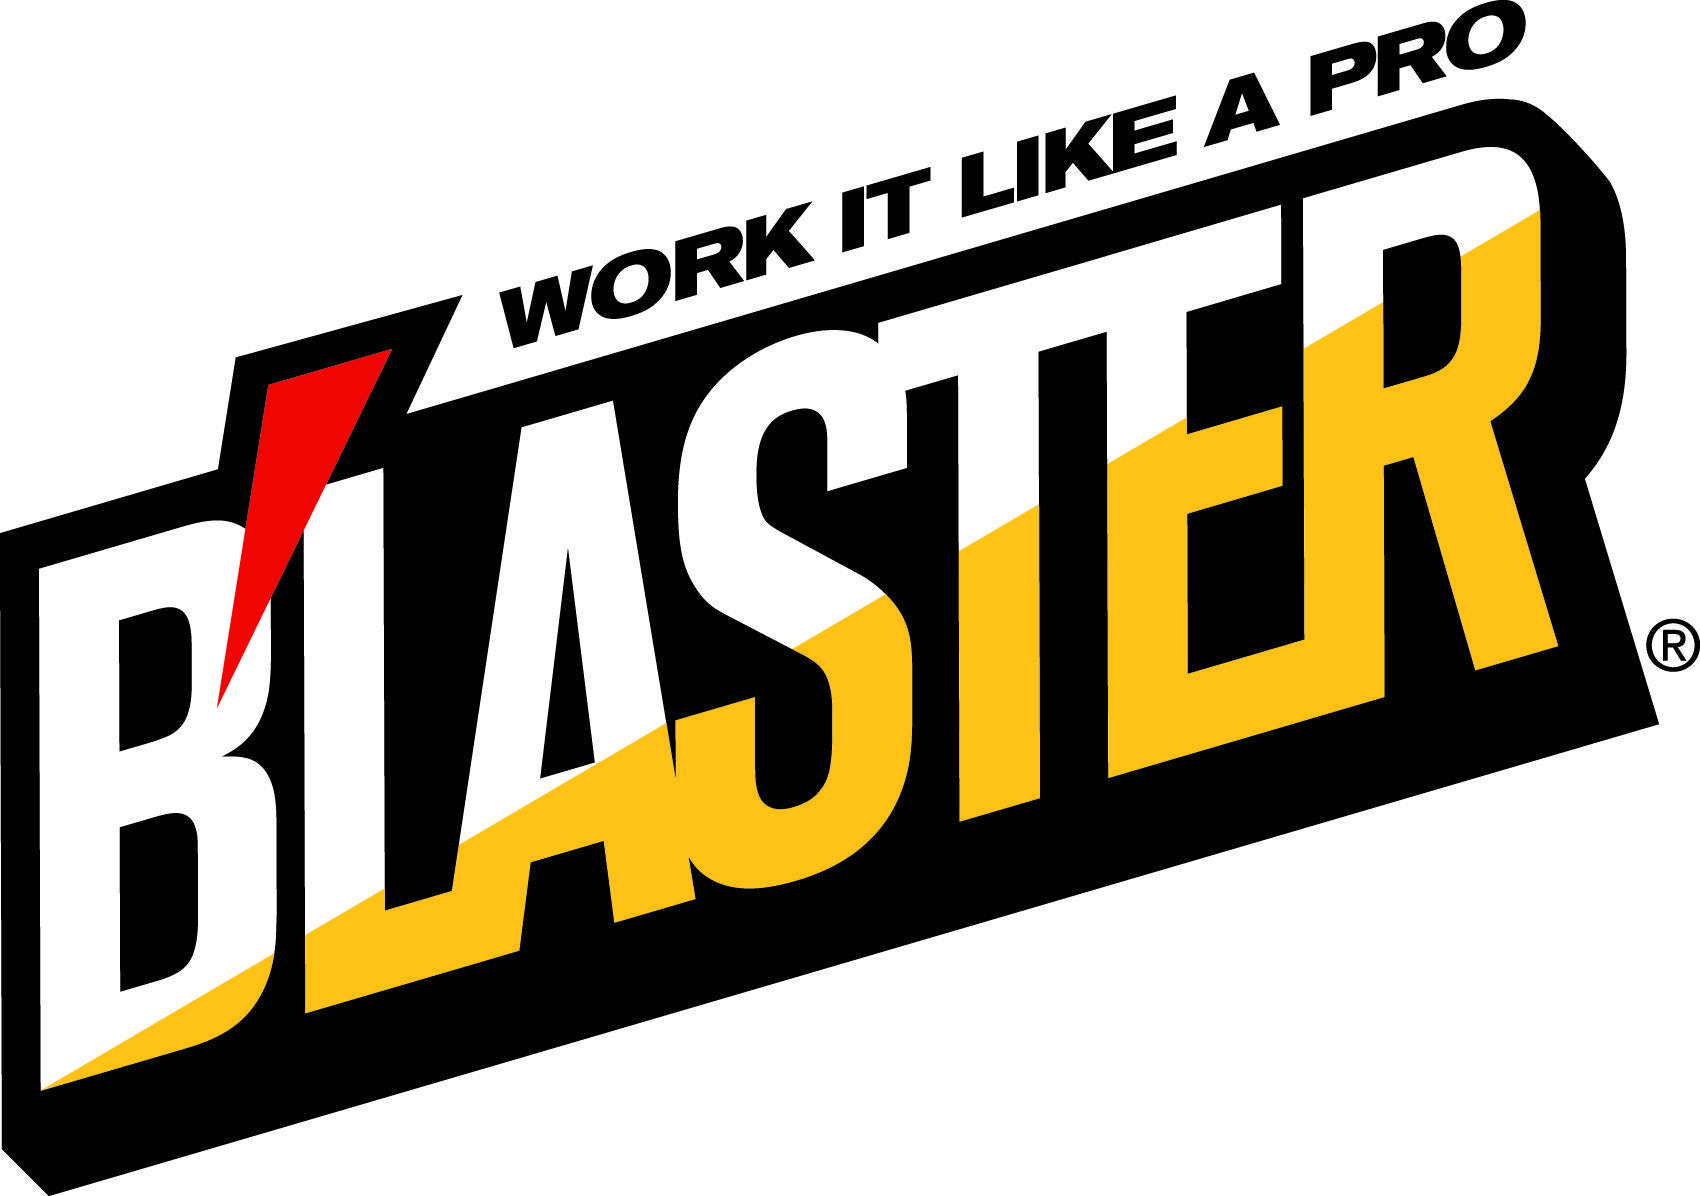 Blaster Logo - Logo Artwork Downloads. The B'laster Corporation